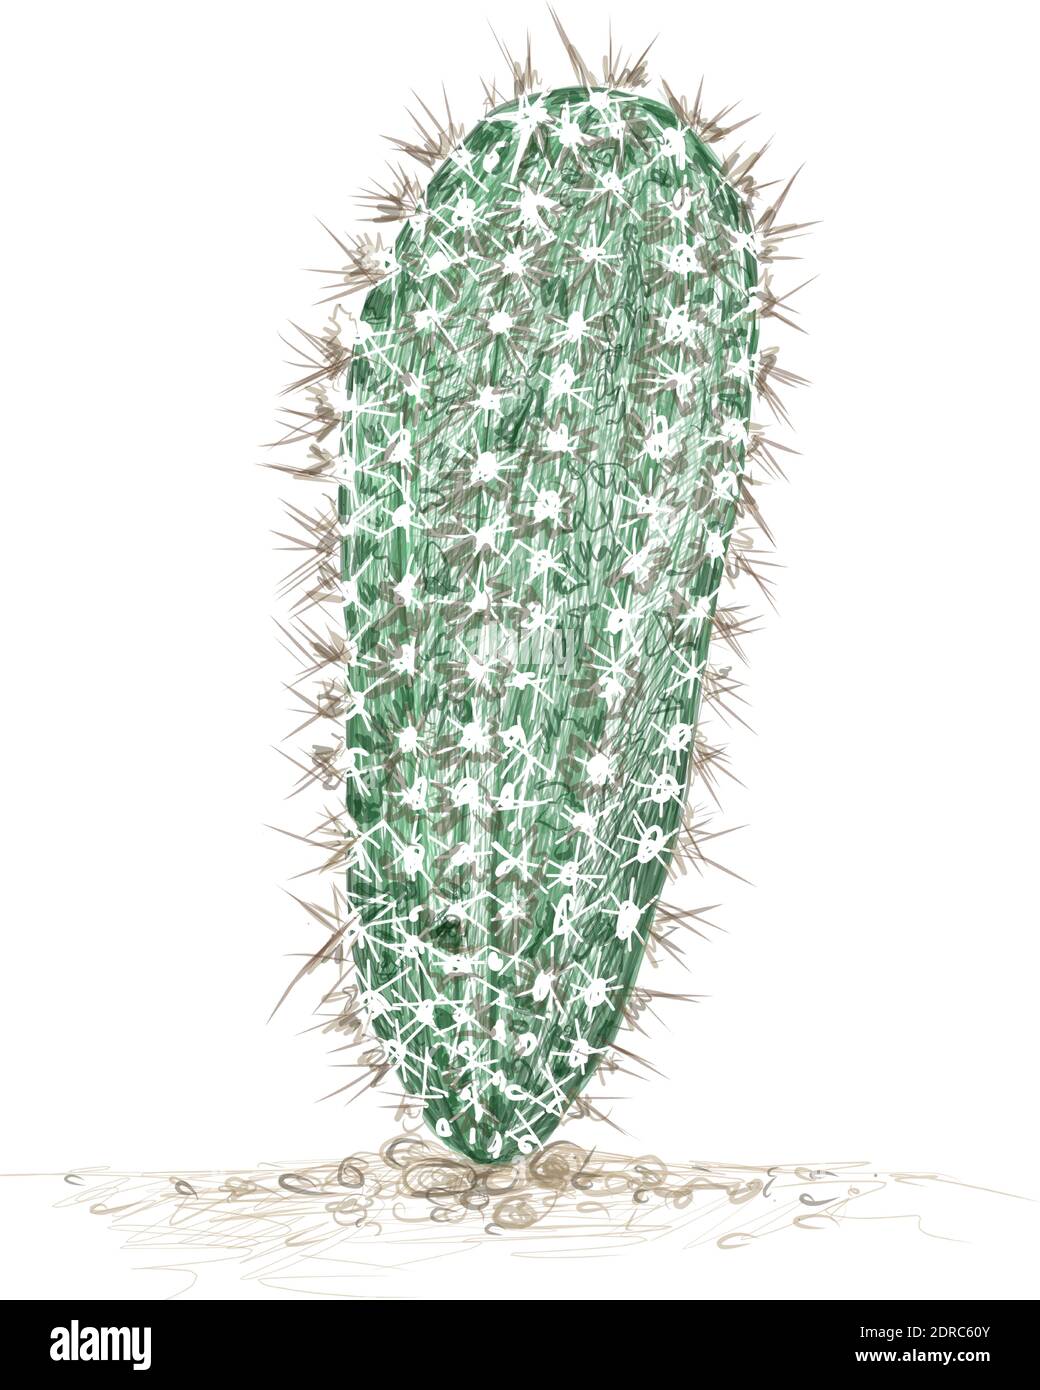 Illustration Hand Drawn Sketch of Armatocereus Cactus or Triangle Cactus for Garden Decoration. Stock Vector